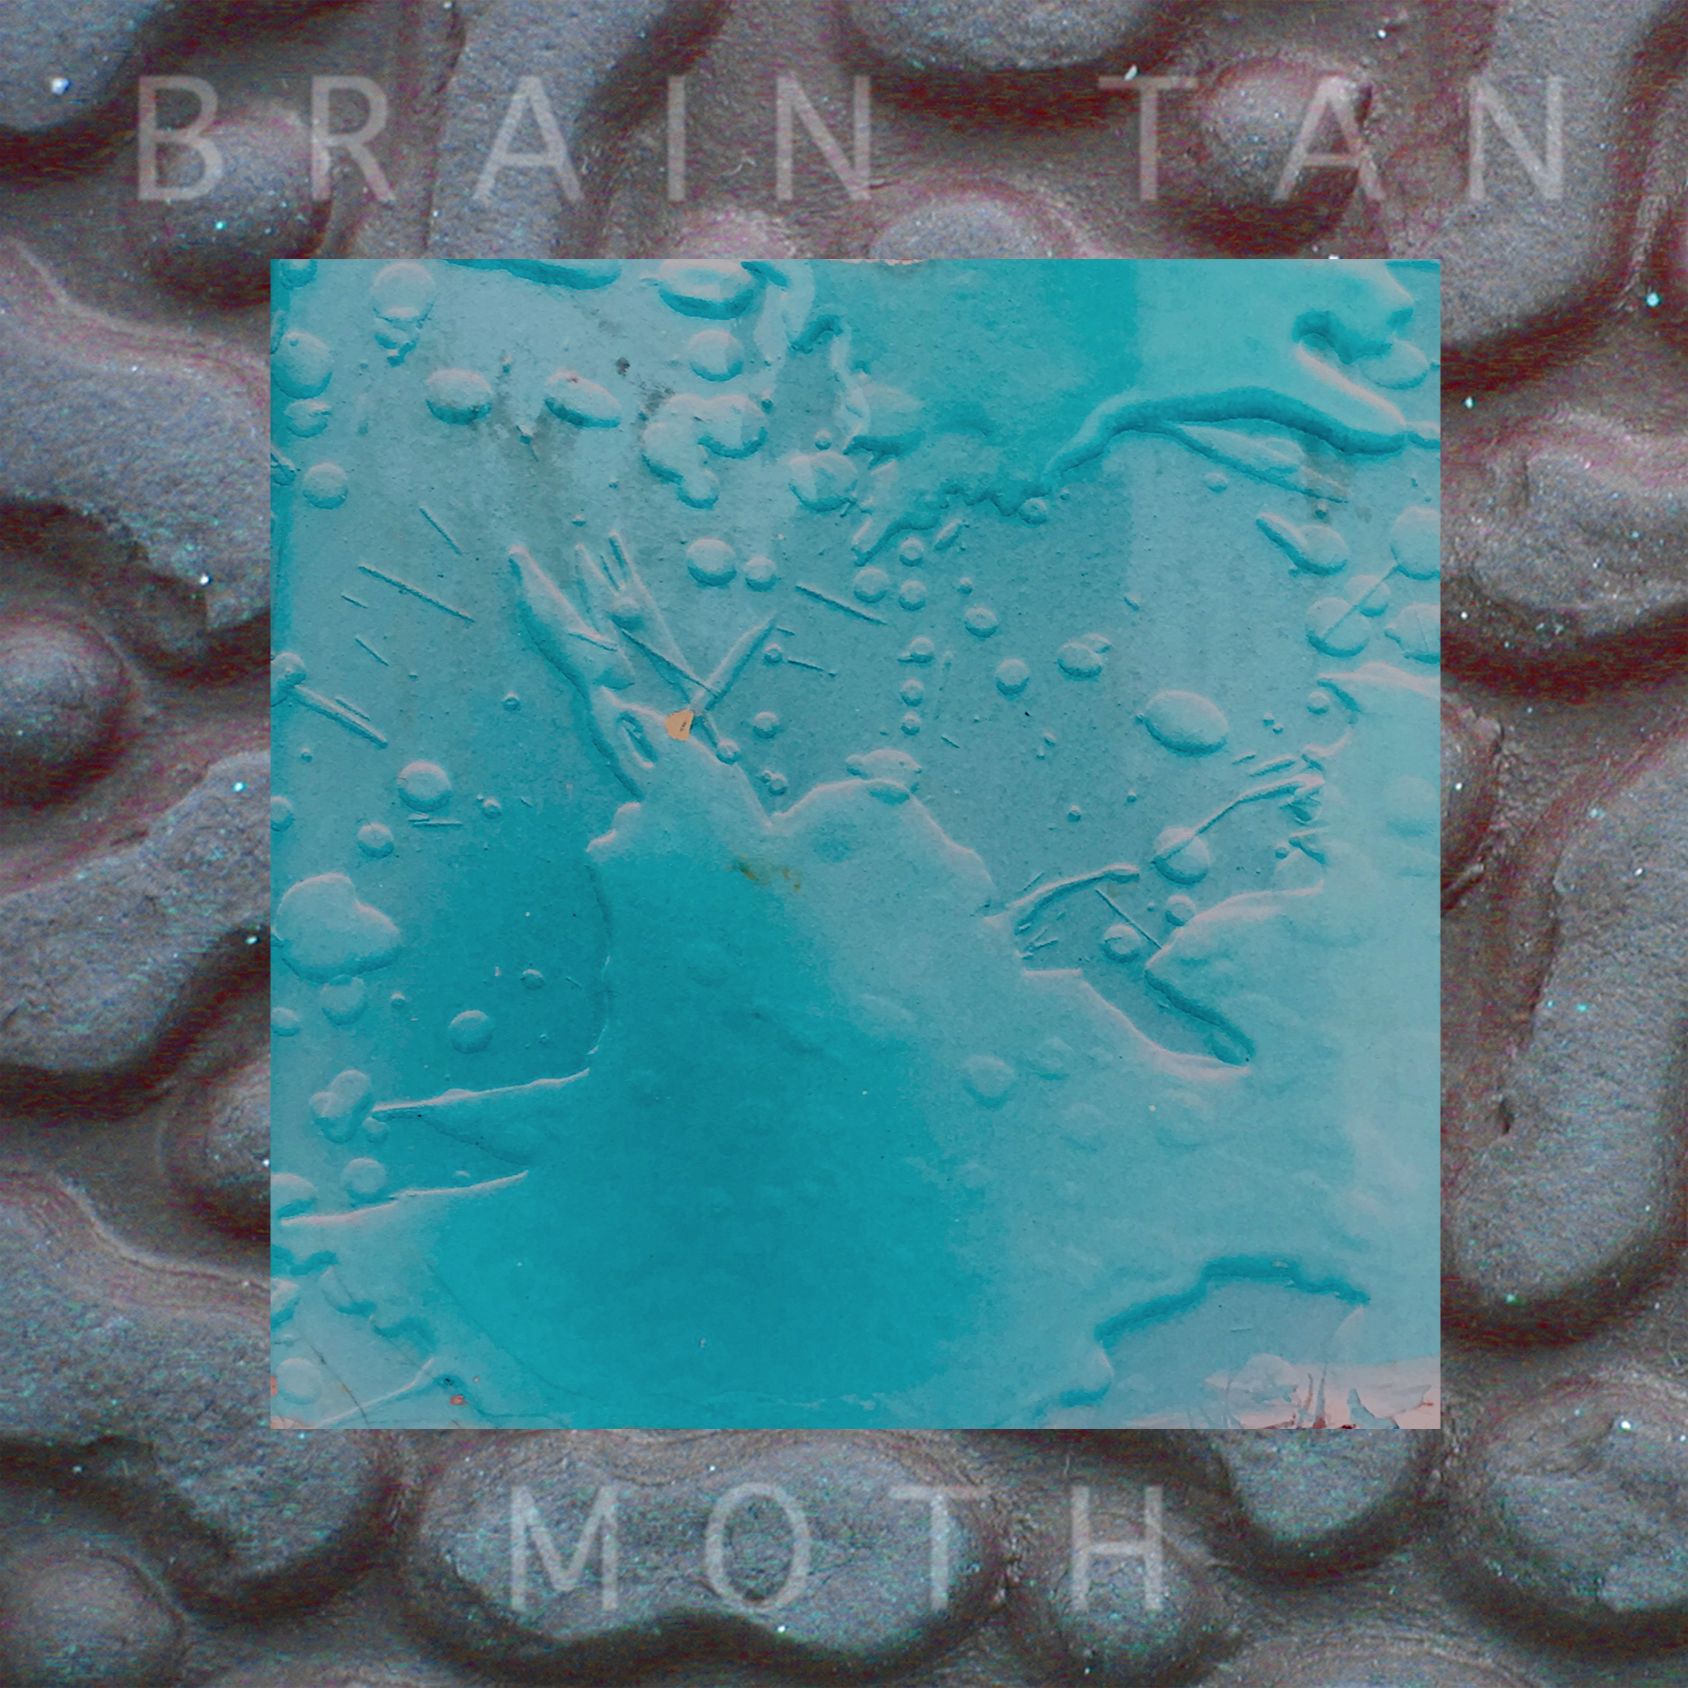 BRAIN TAN – “Moth”